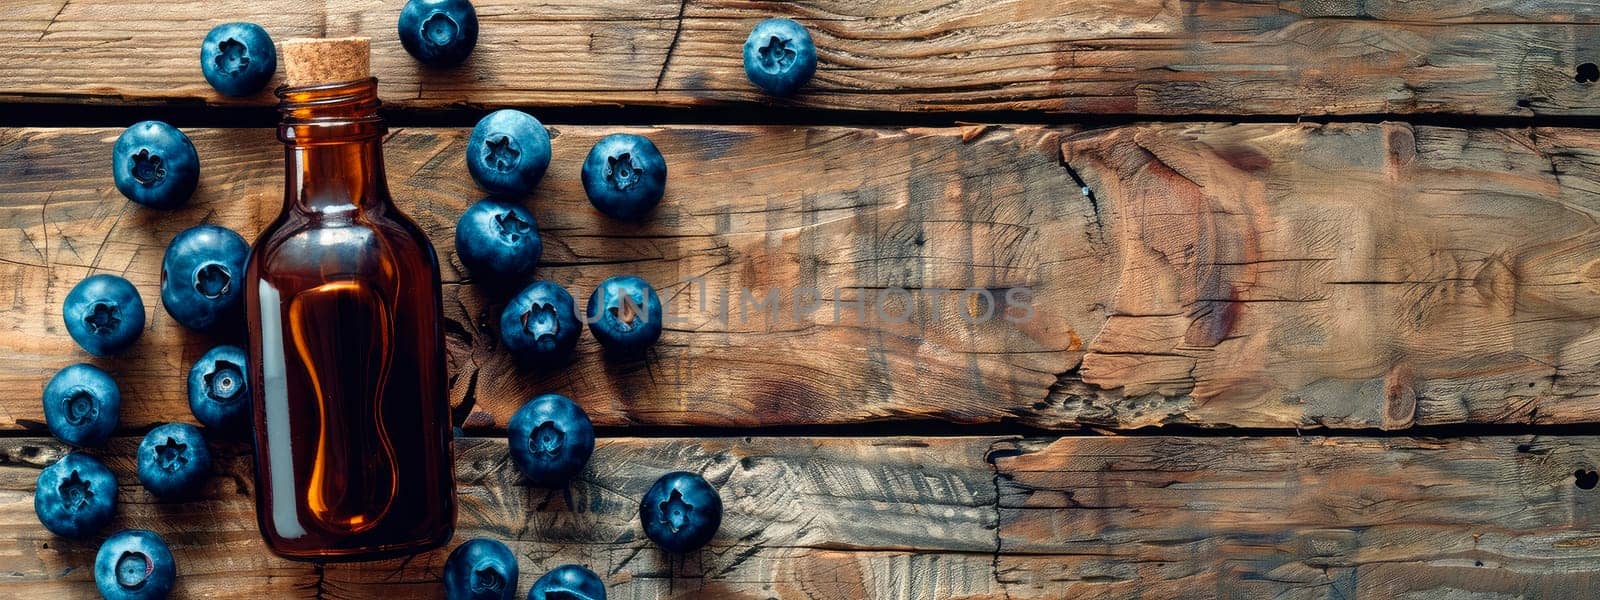 blueberries essential oil in a bottle. Selective focus. by yanadjana